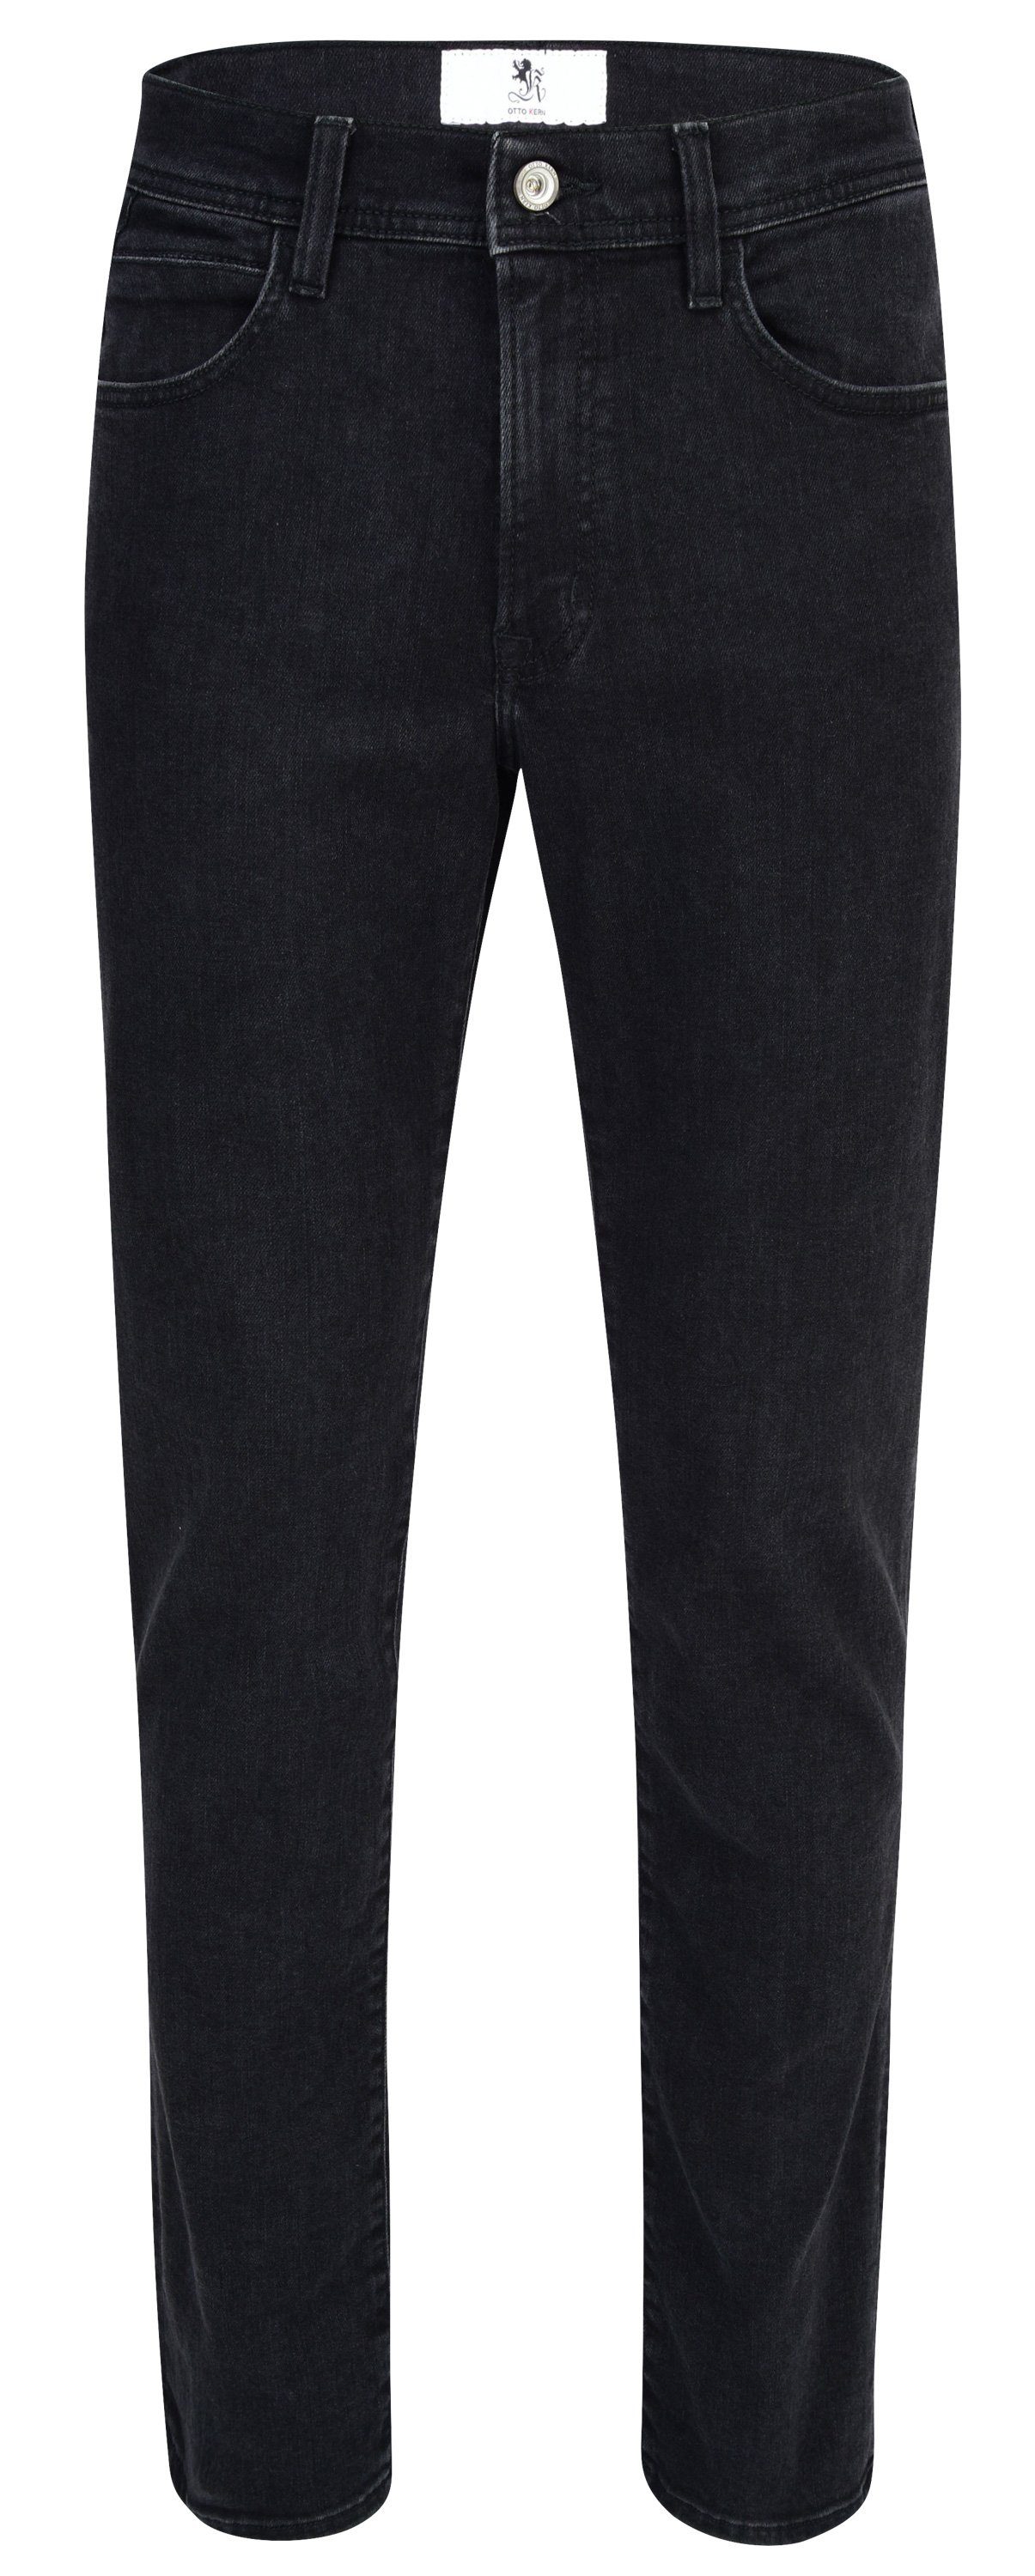 Kern 5-Pocket-Jeans OTTO JOHN black 67043 KERN stonewash 6812.9801 black